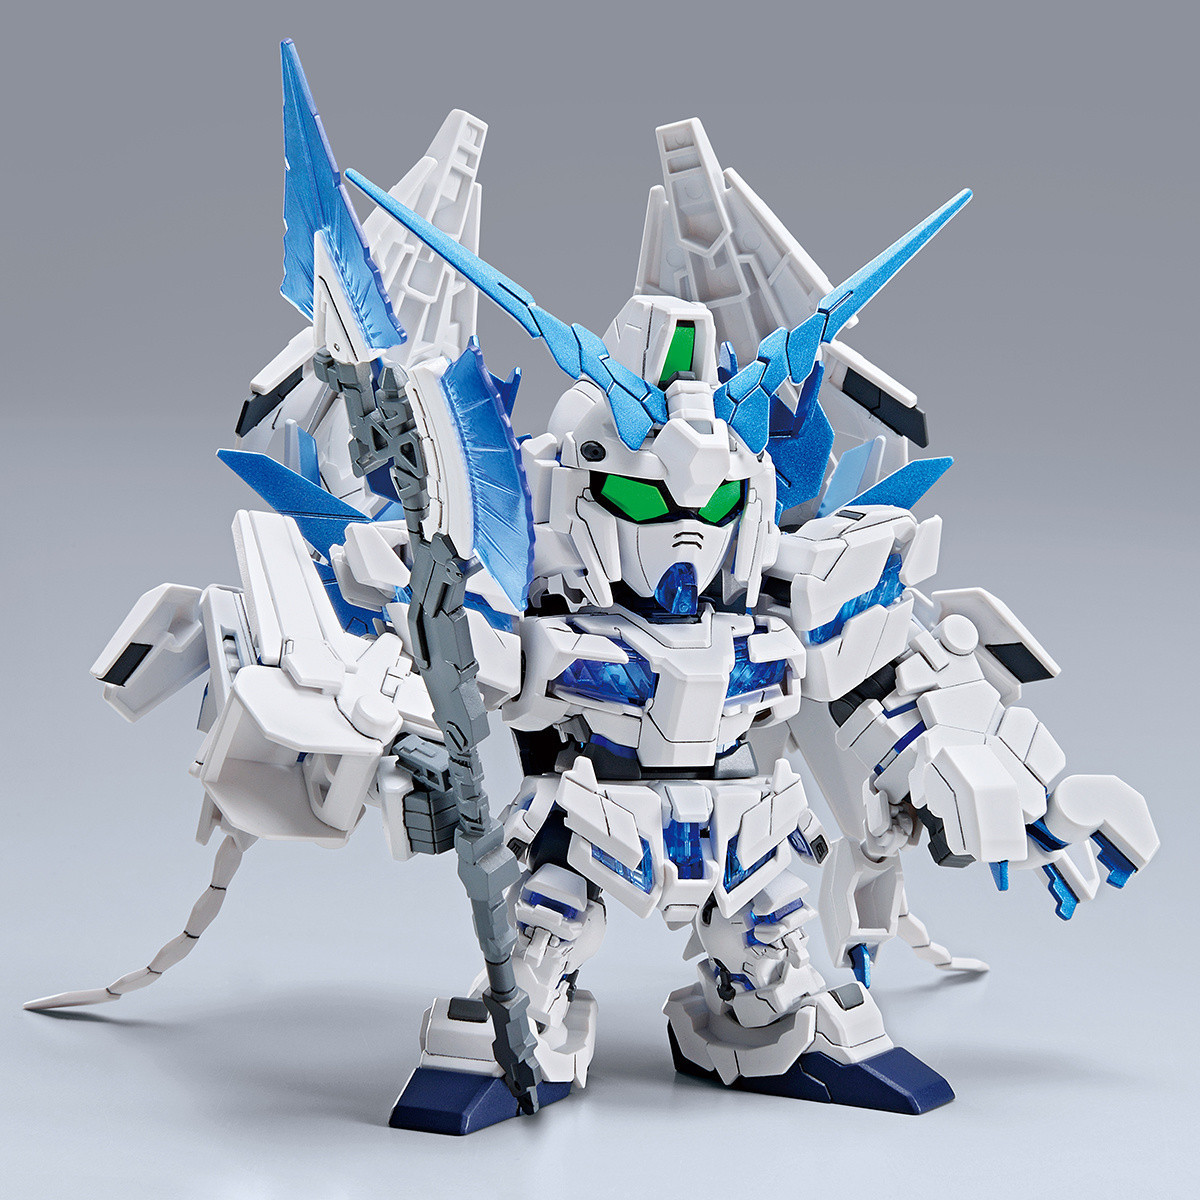 Gundam Model Qiyue Sd Warrior Flying Wing Seven Swords New Unicorn Phoenix Gundam Assembled Robot Hand Office